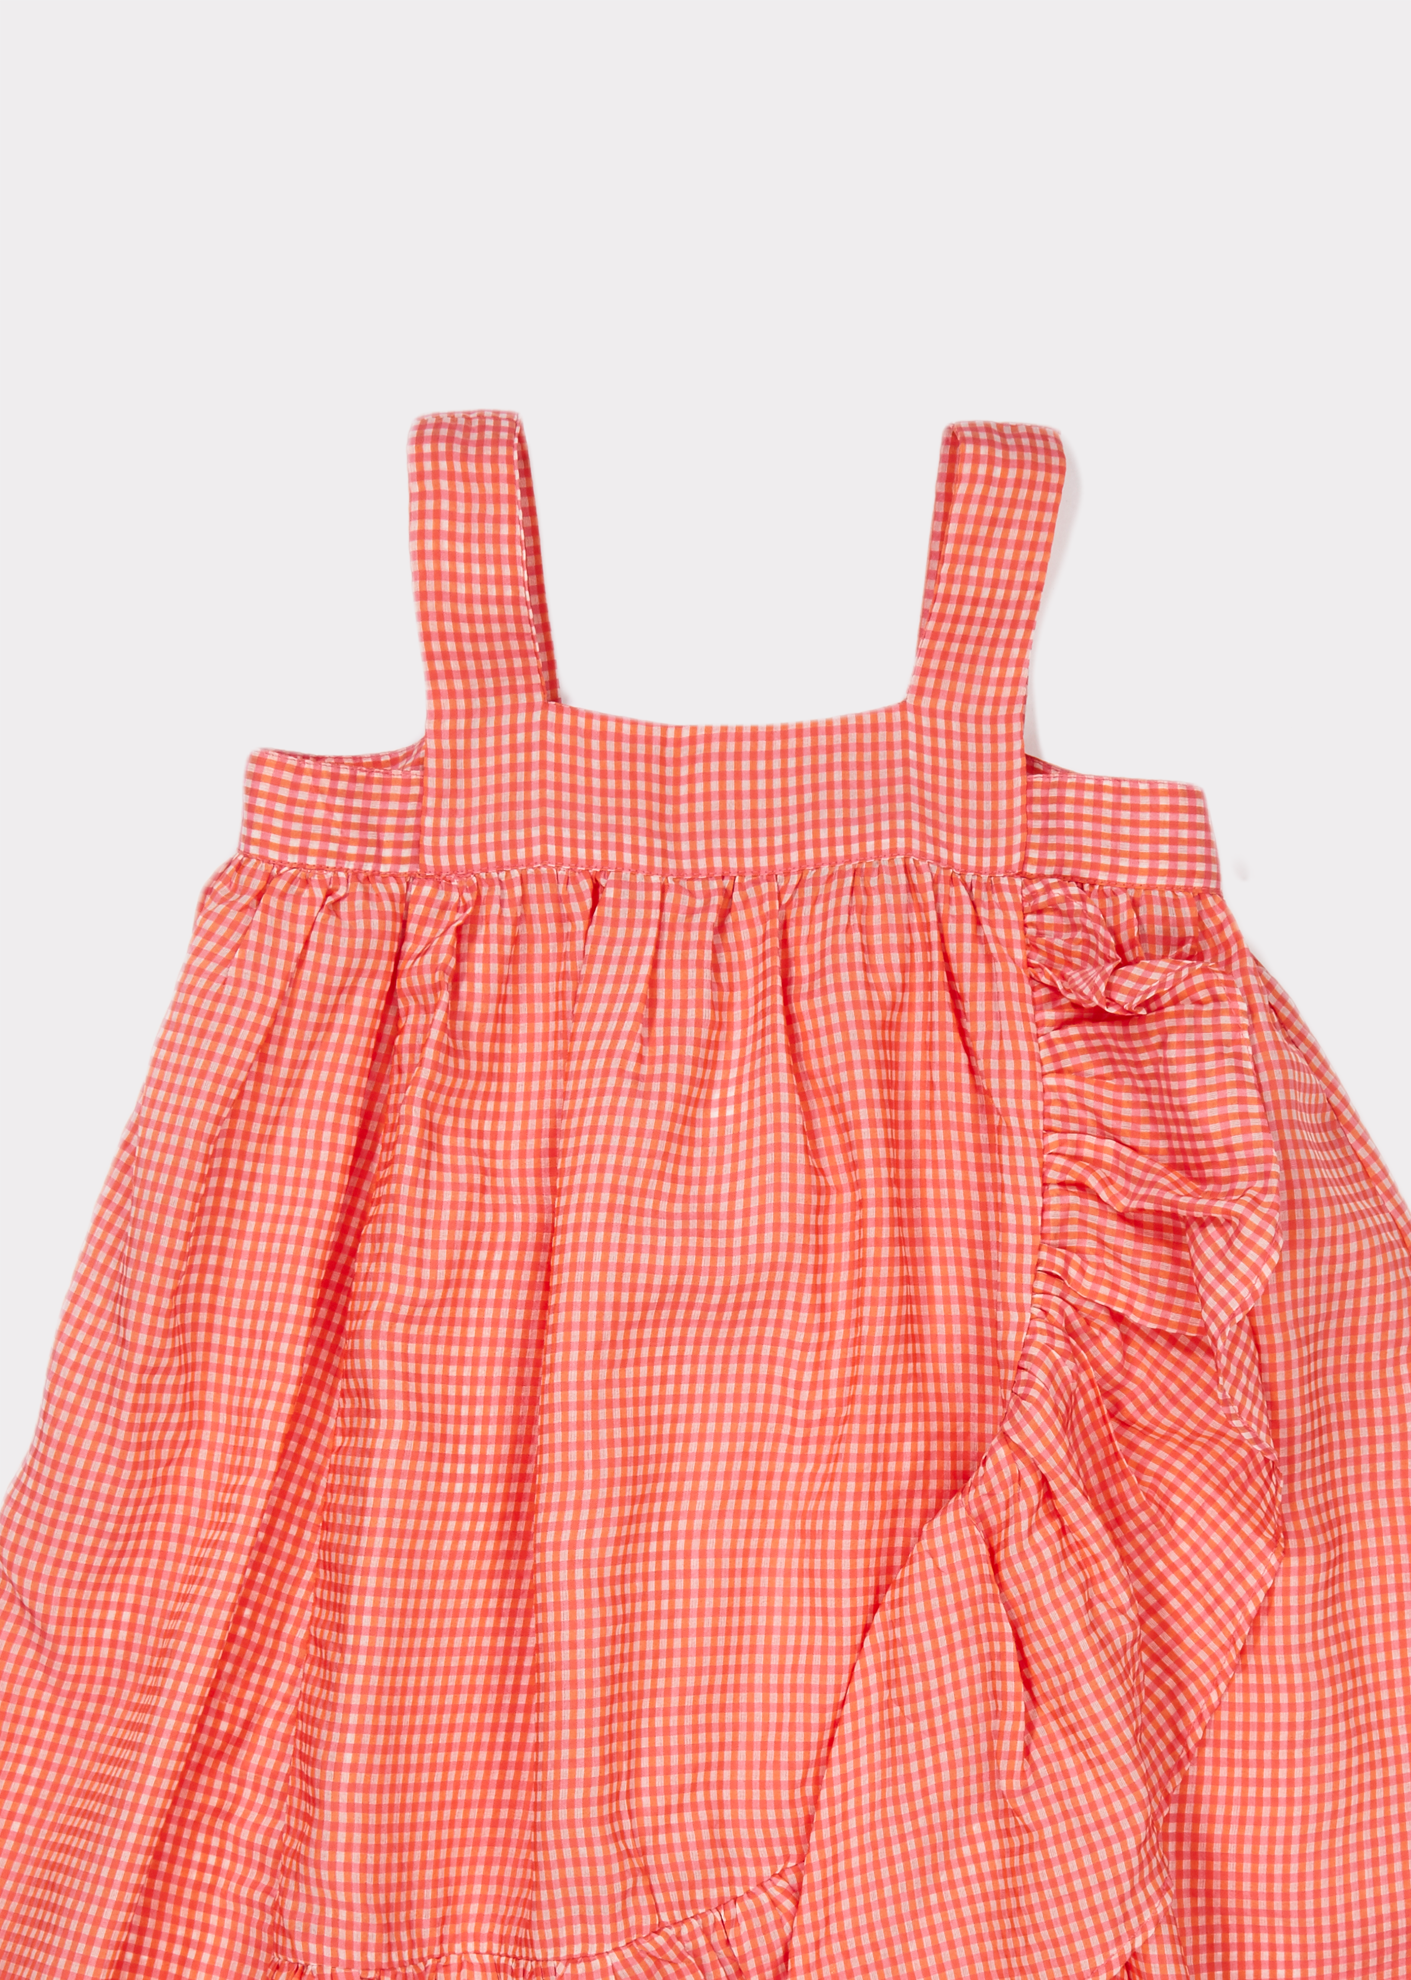 Girls Strawberry Check Dress